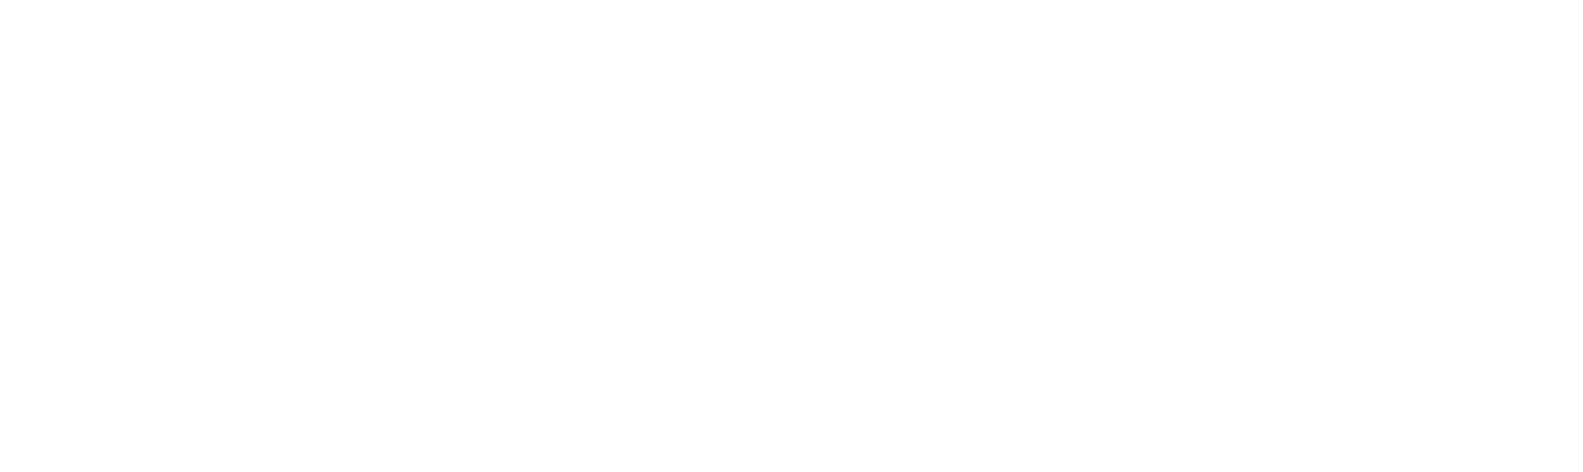 Kodiak Gas Services Logo groß für dunkle Hintergründe (transparentes PNG)